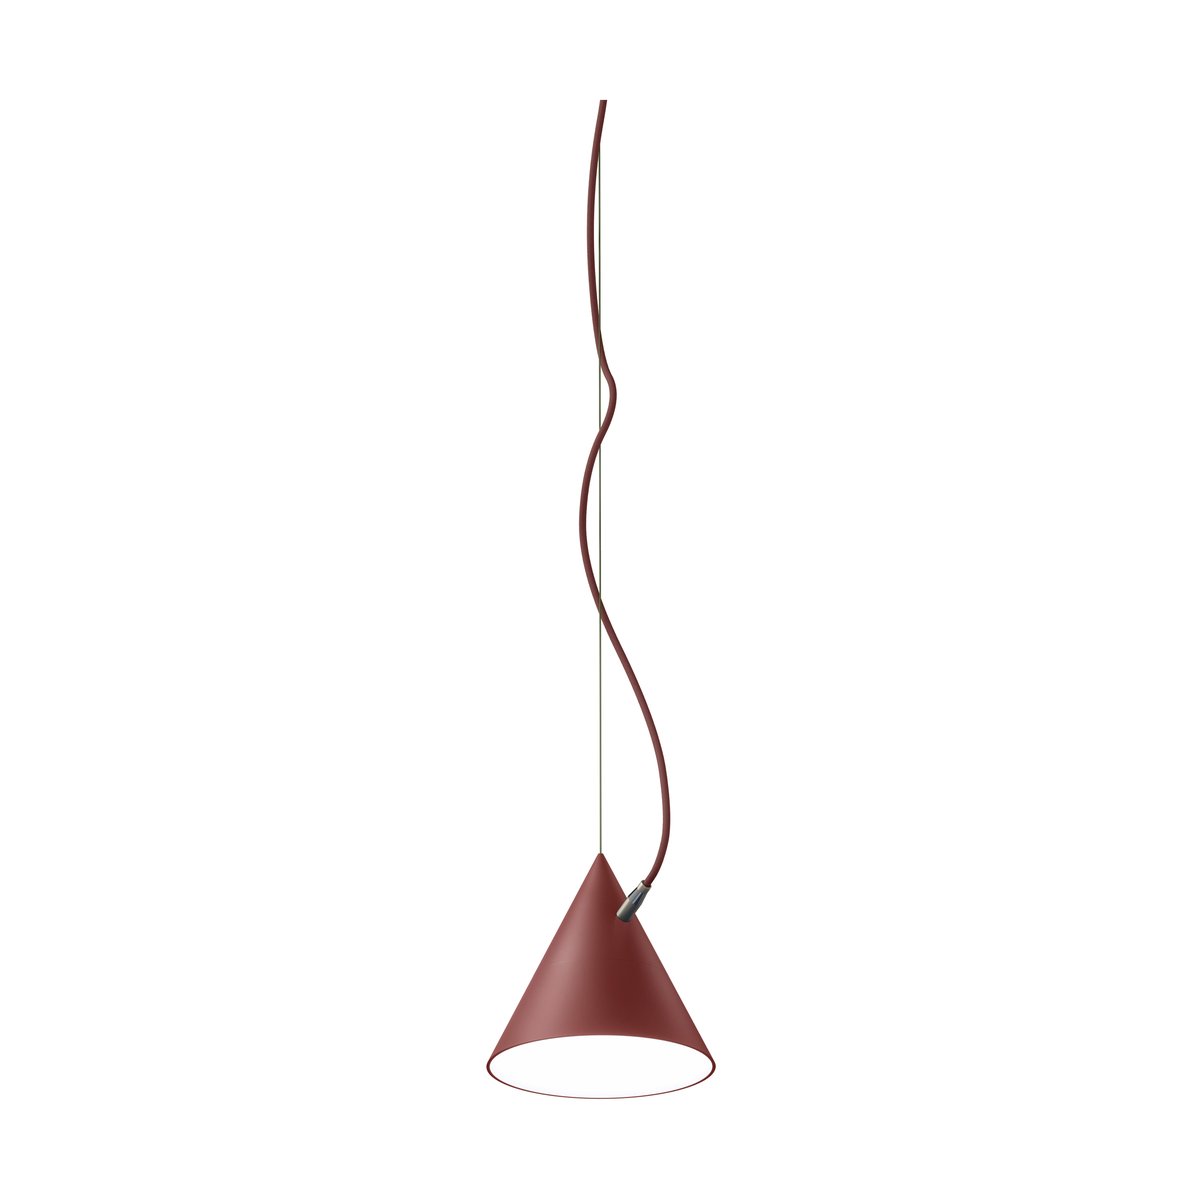 Noon Castor hanglamp 20 cm Bordeauxrood-donkerrood-messing